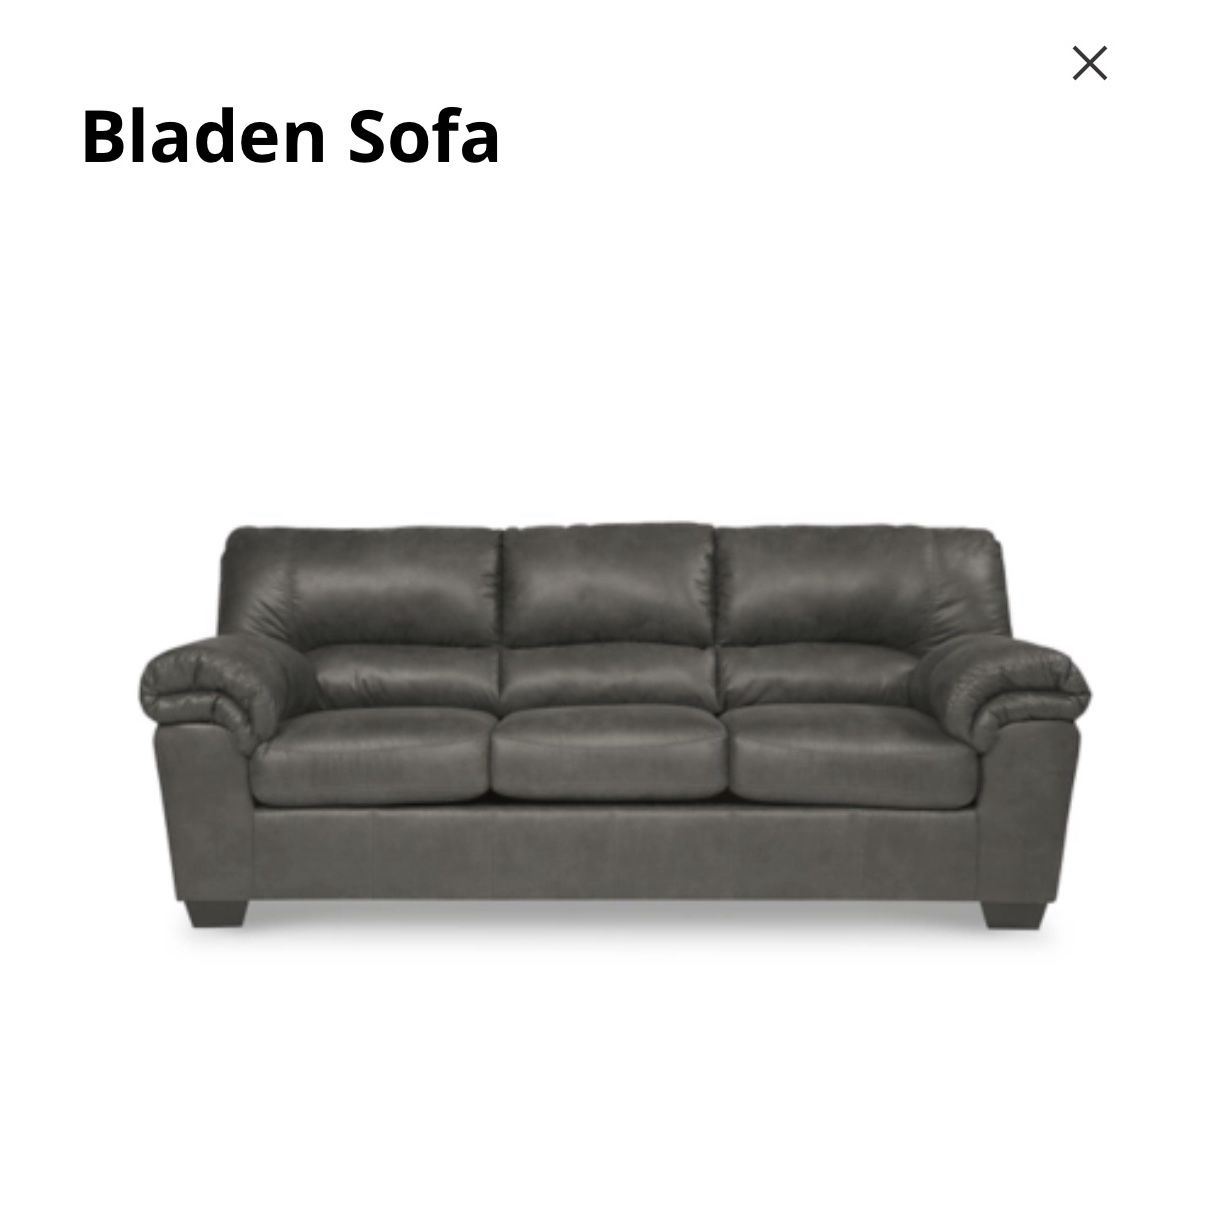 Ashley Bladen sofa 